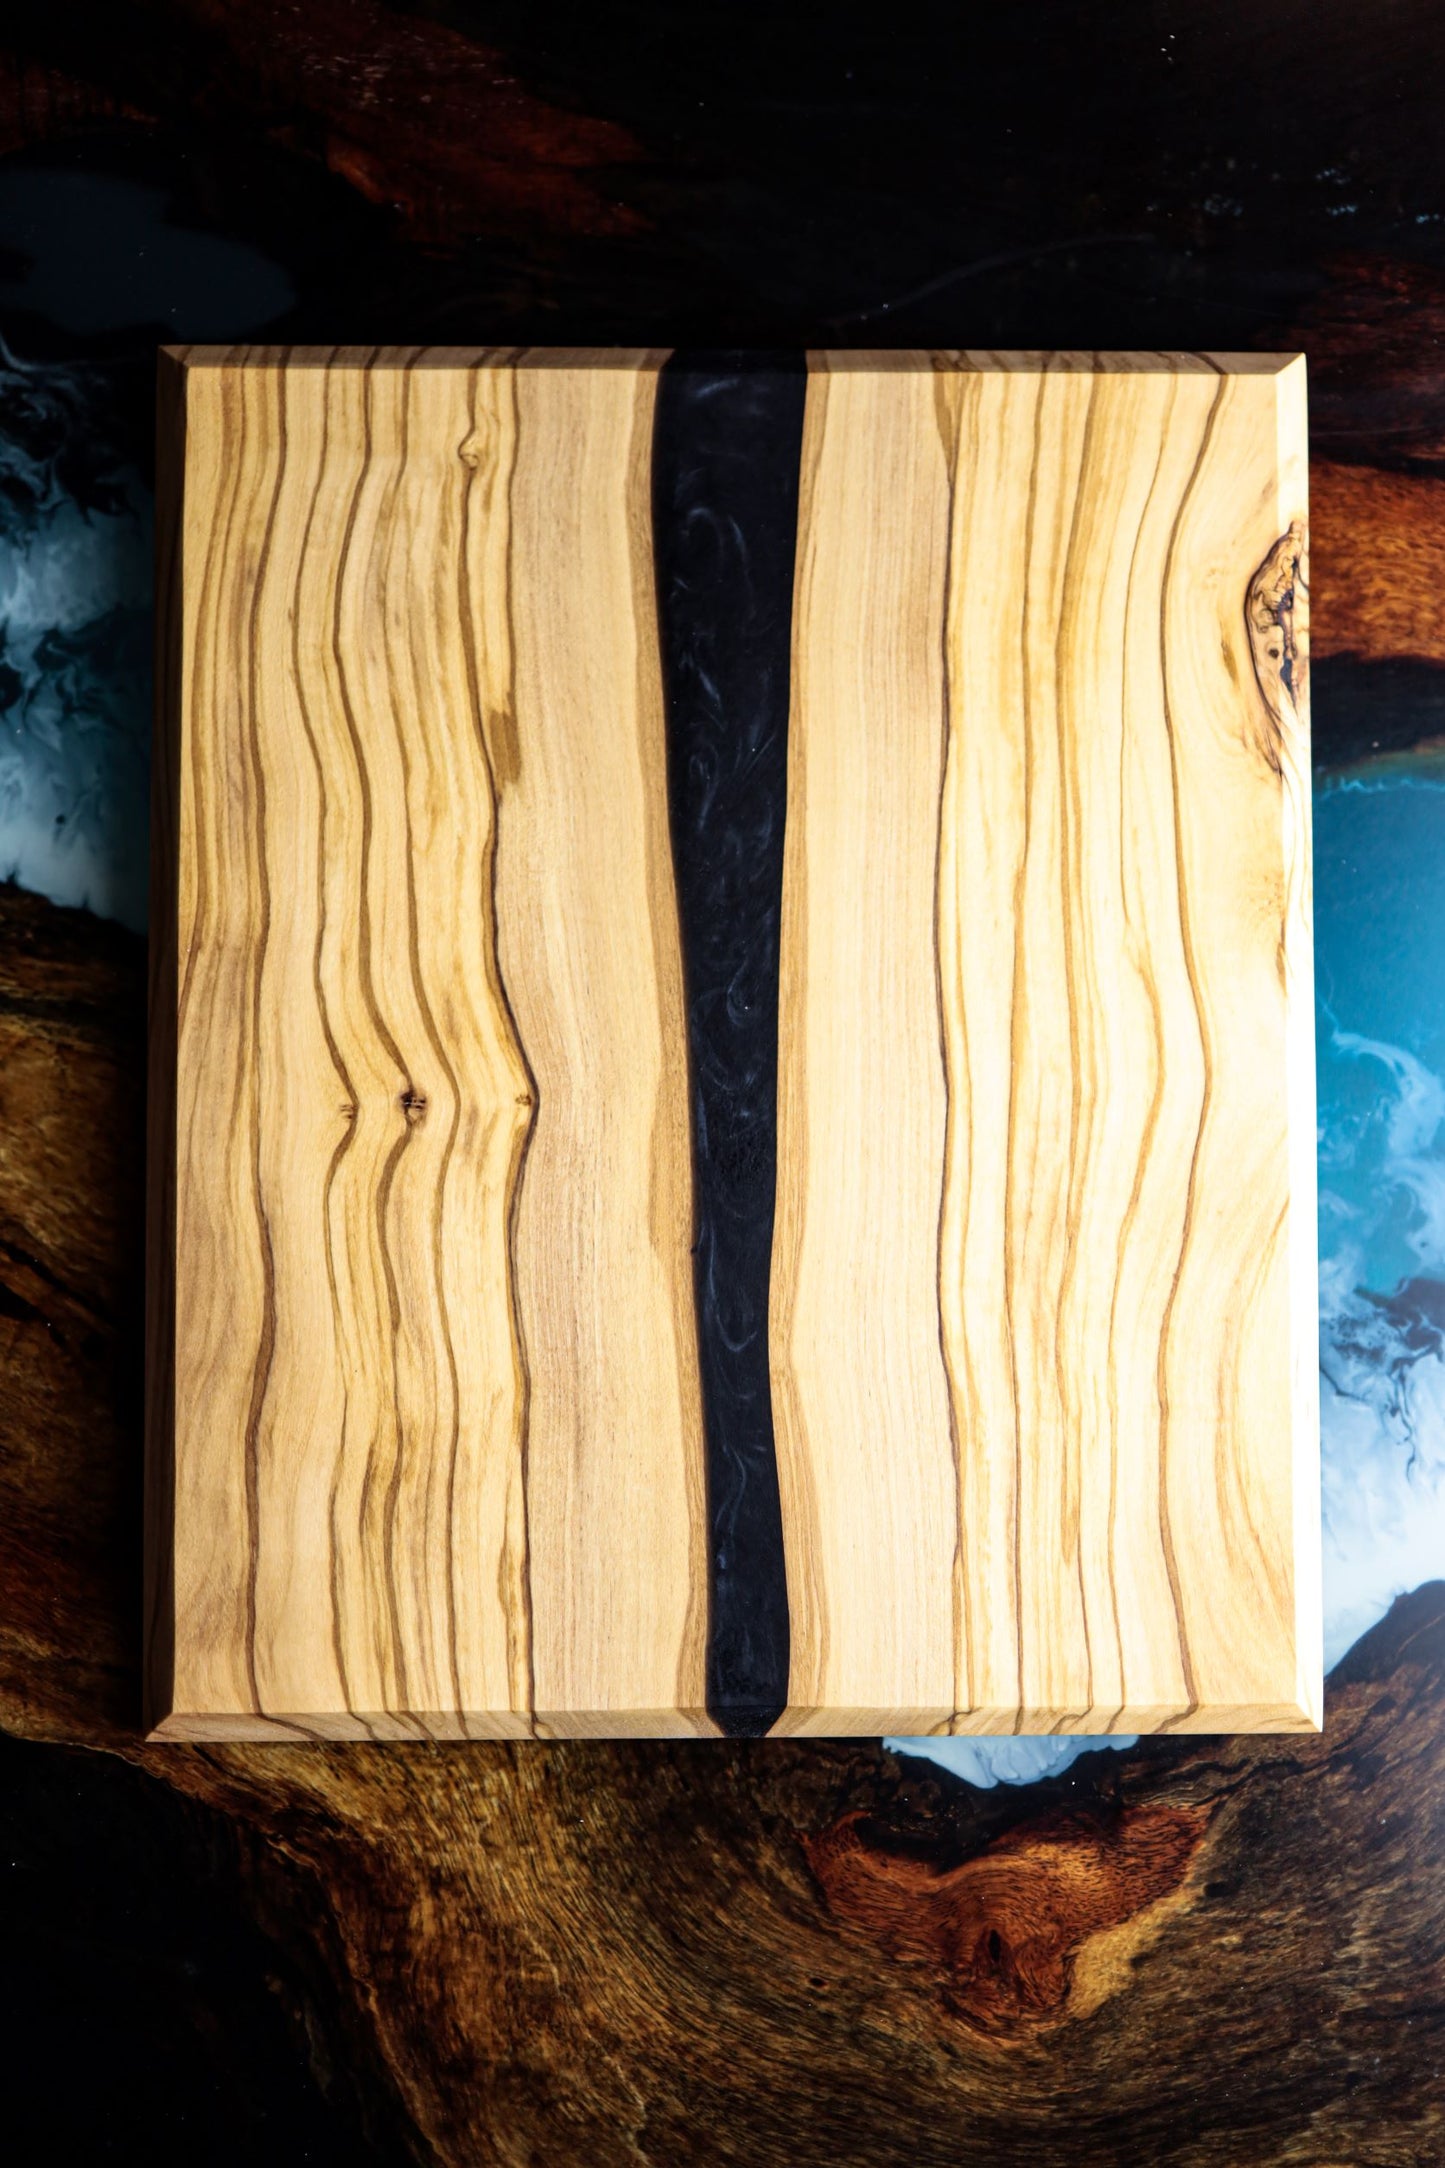 Handmade Olive Wood Live Edge Cutting Board with Black Epoxy River